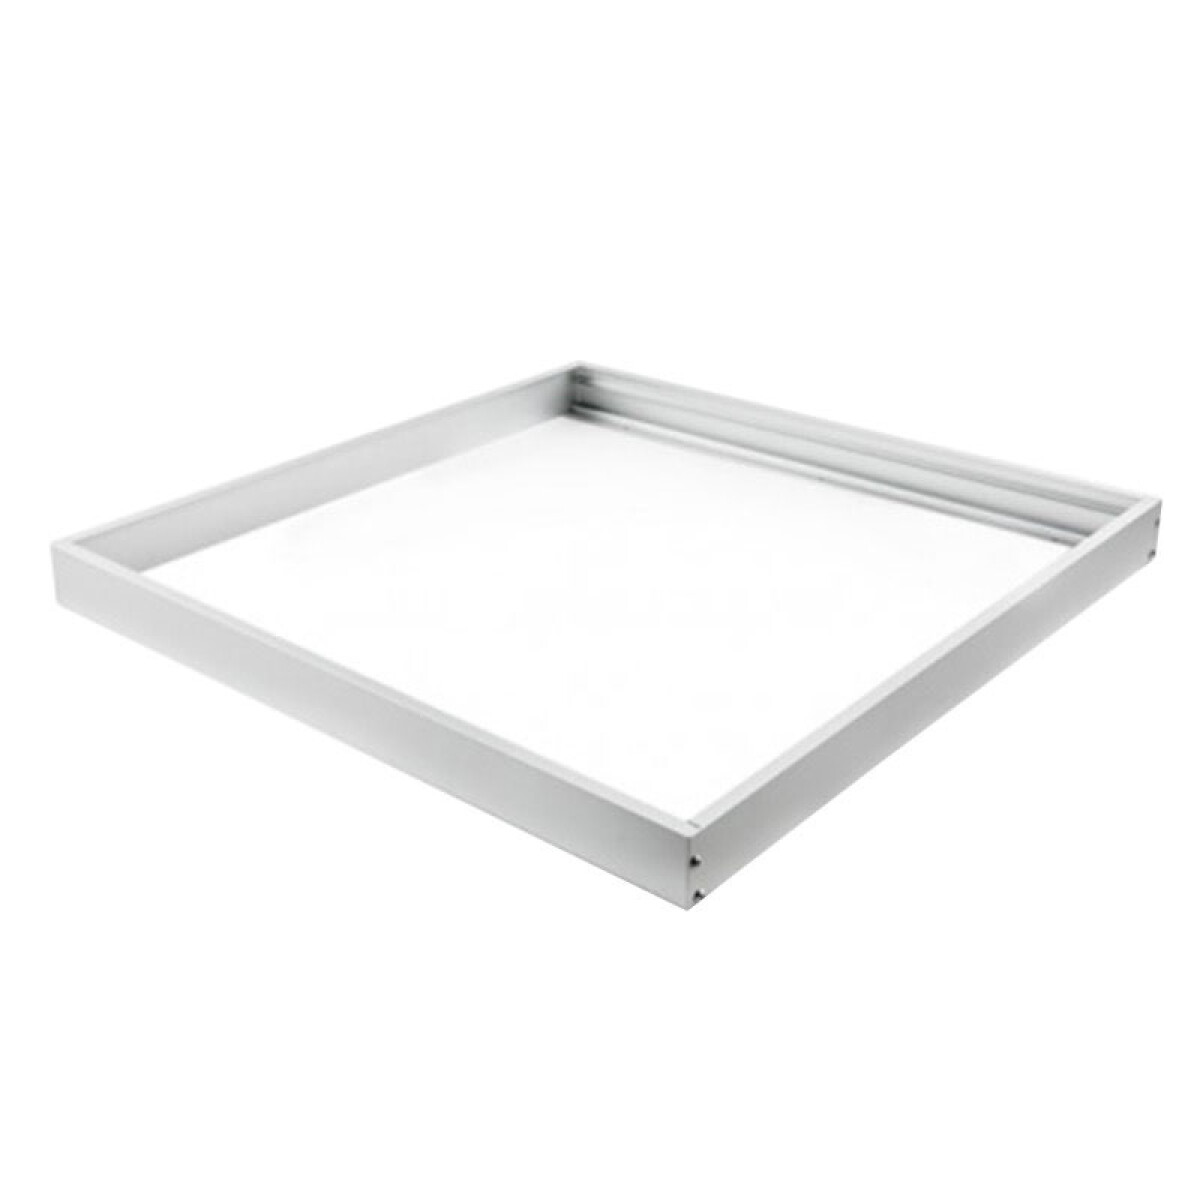 Marco alto blanco p/adosar panel LED 605x605x50mm - IX2242 